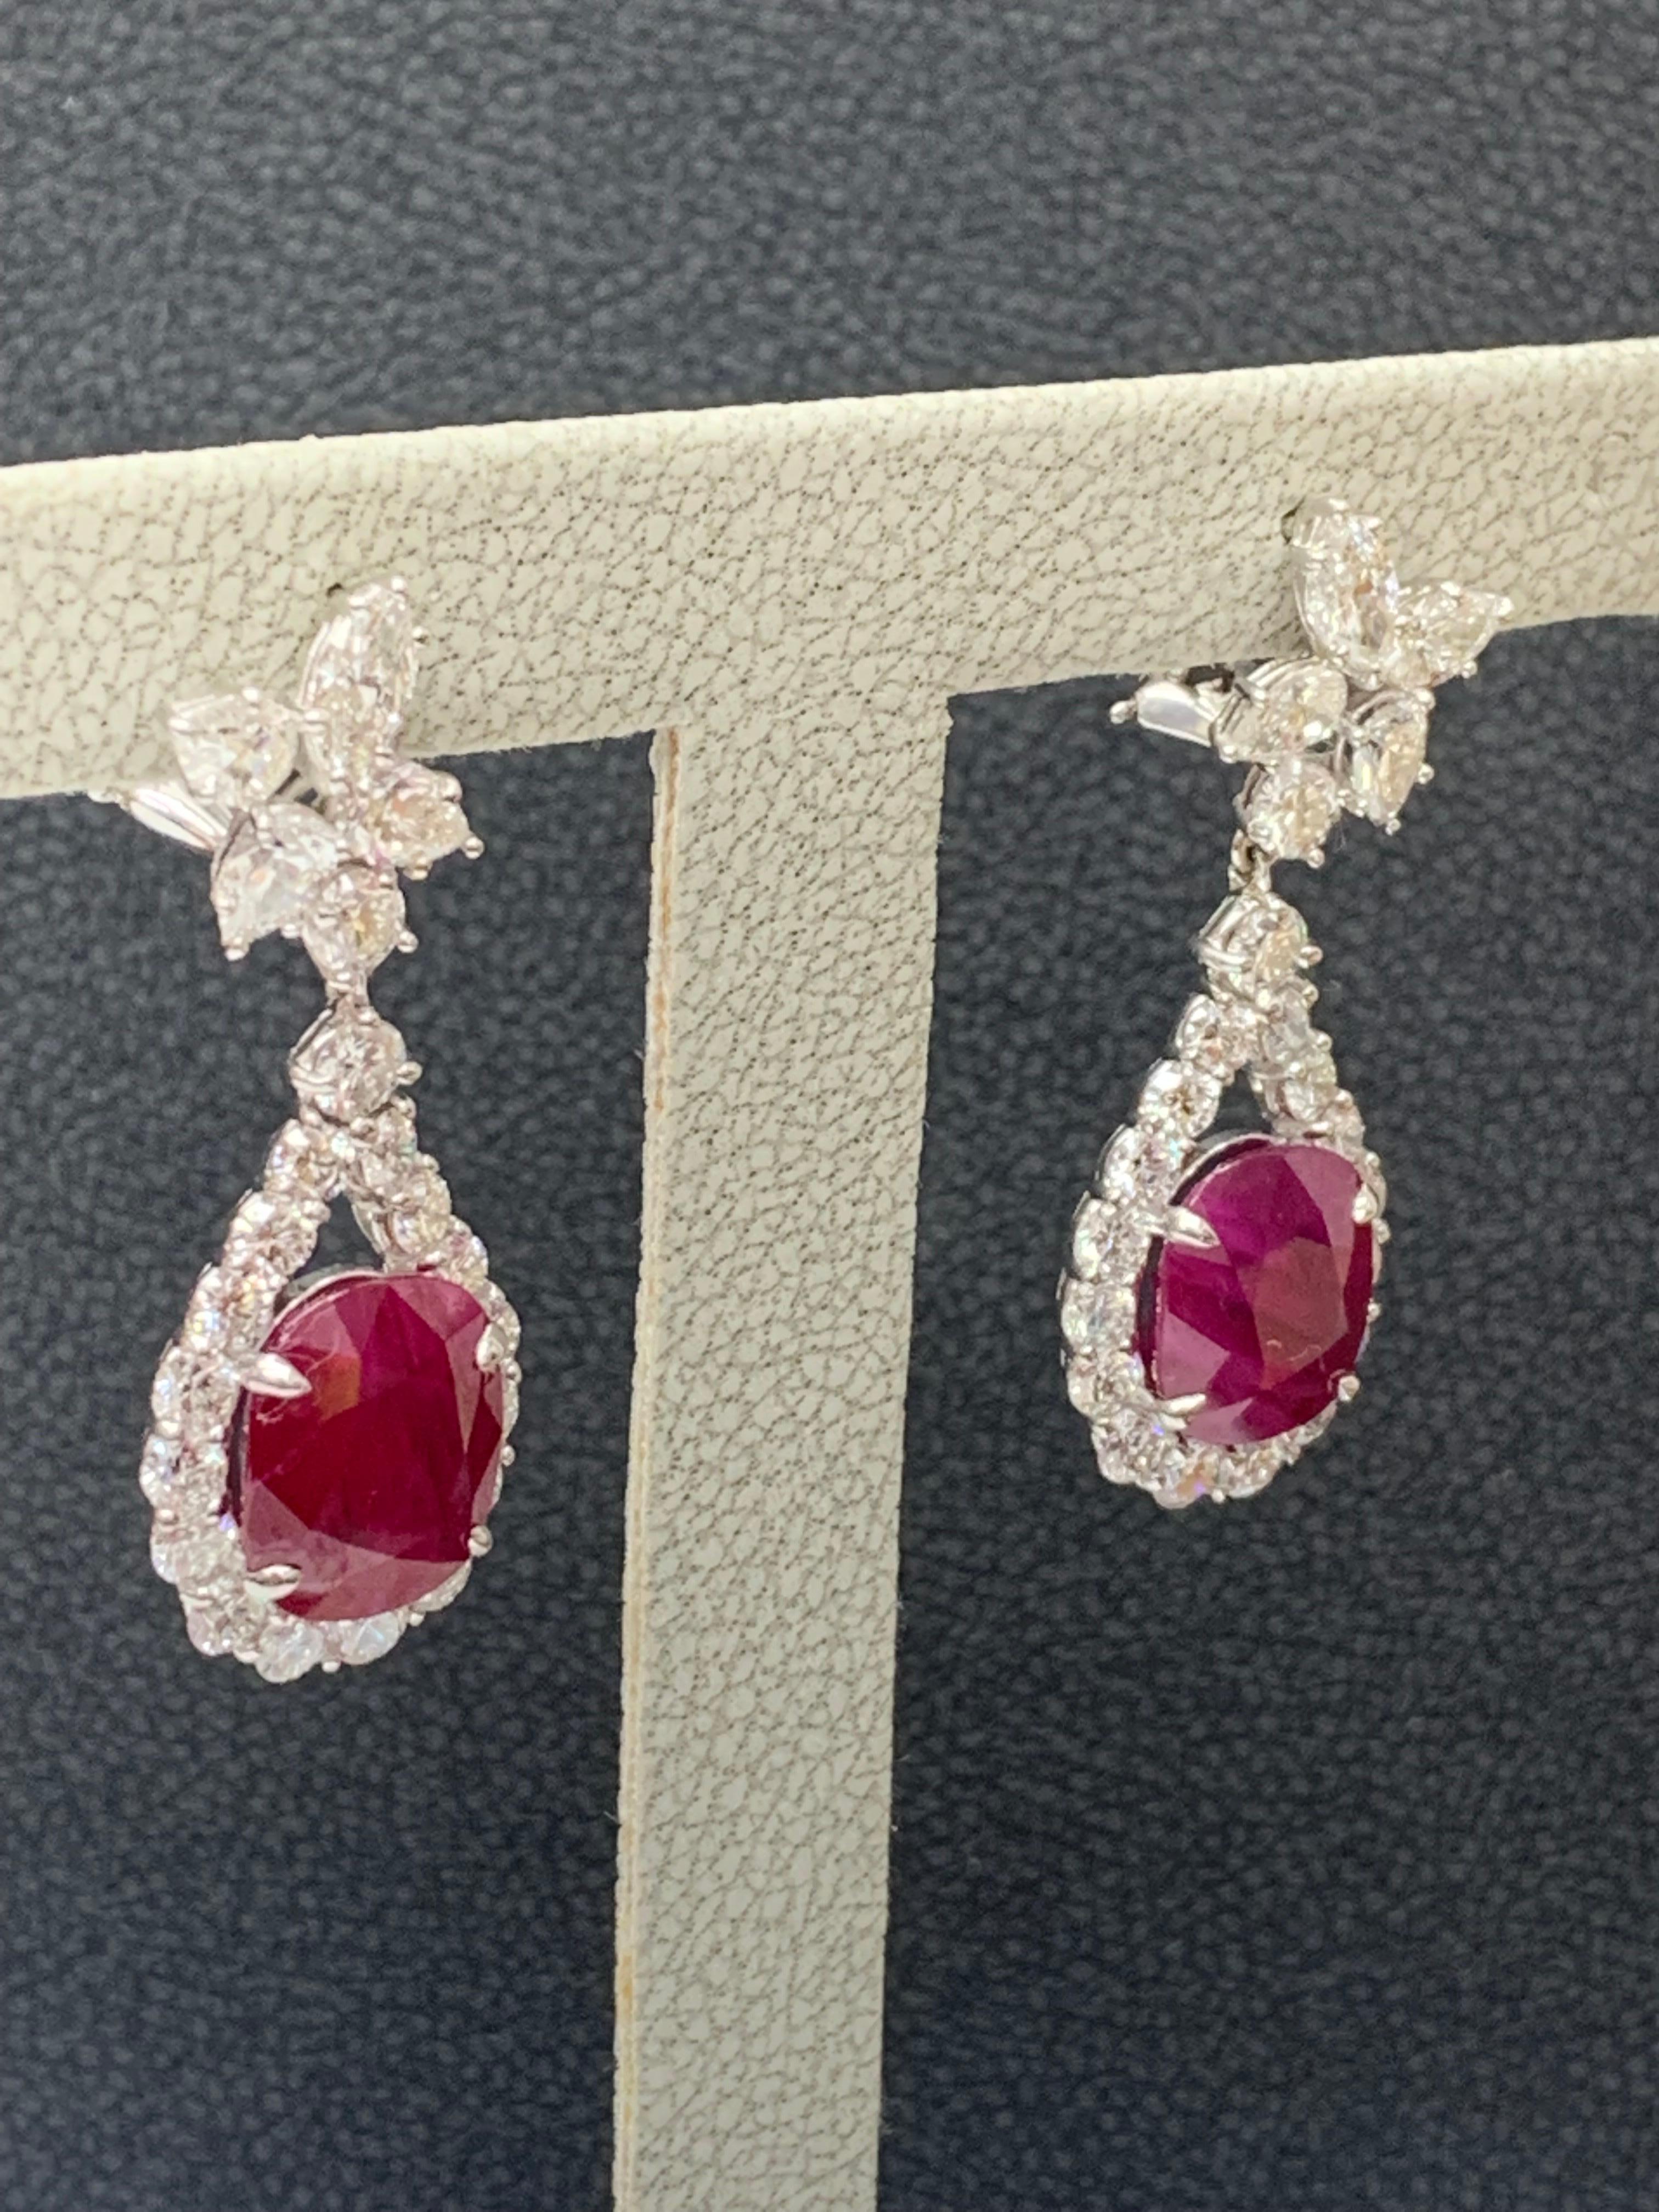 Cushion Cut Certified 10.18 Carat Burma Ruby and Diamond Drop Earrings in 18K White Gold For Sale